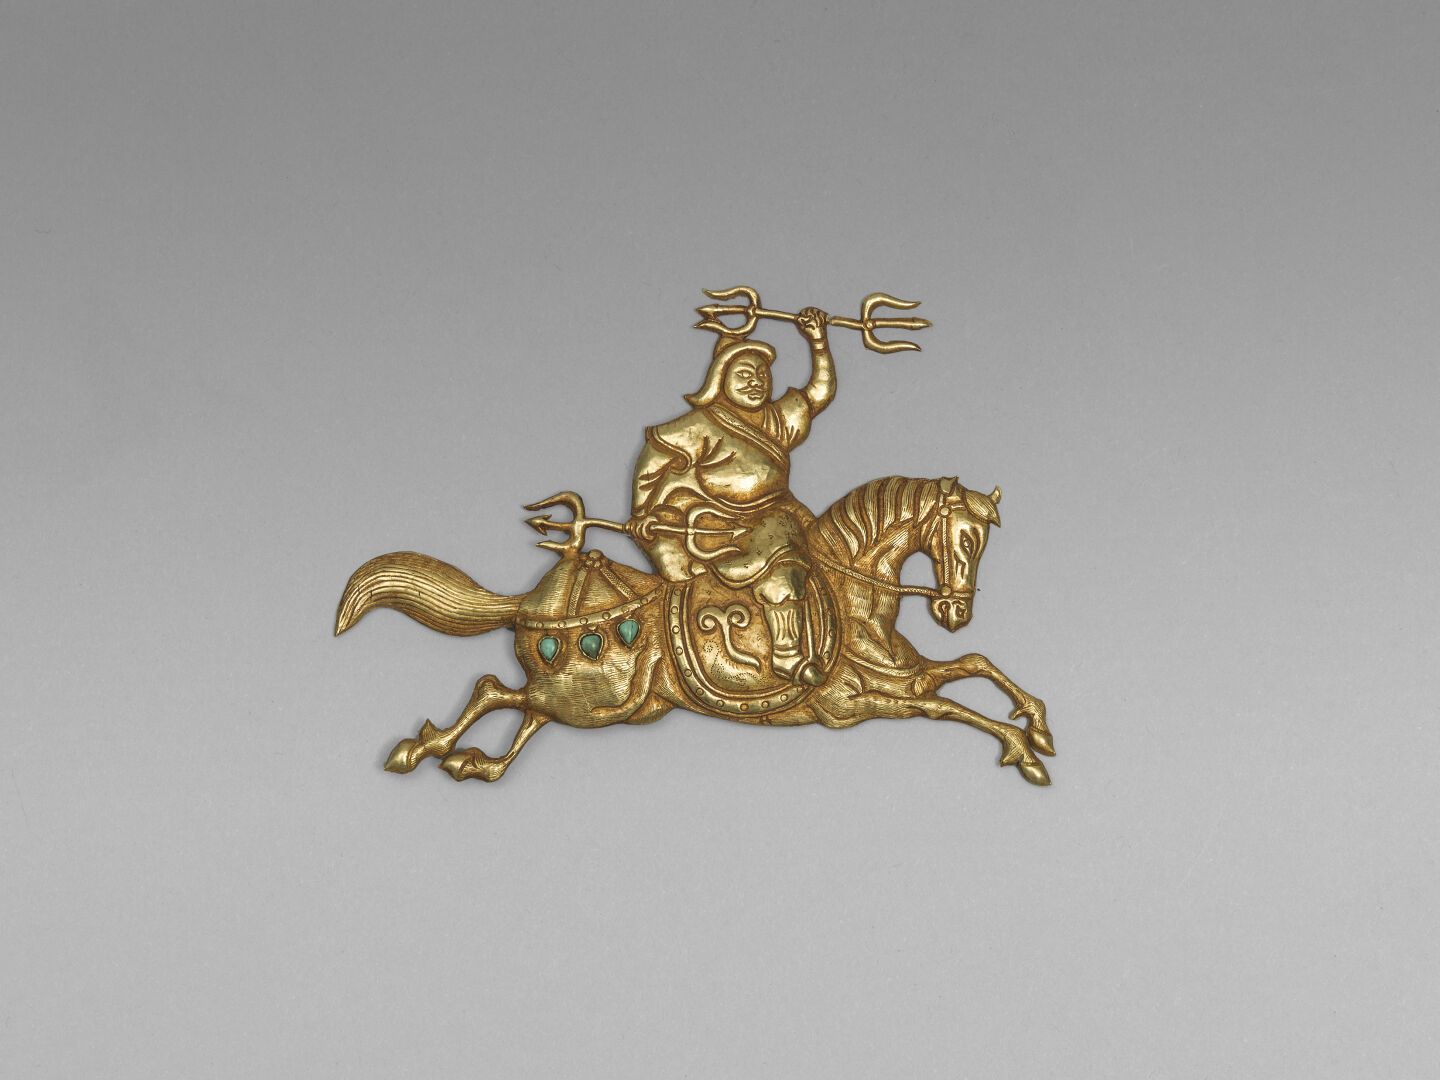 Null 金盘750°/00，压印和镶嵌绿松石，描绘了一个蒙古骑手在其坐骑上驰骋的情景

20世纪

PB : 19,98 克

长：12厘米

(1137)